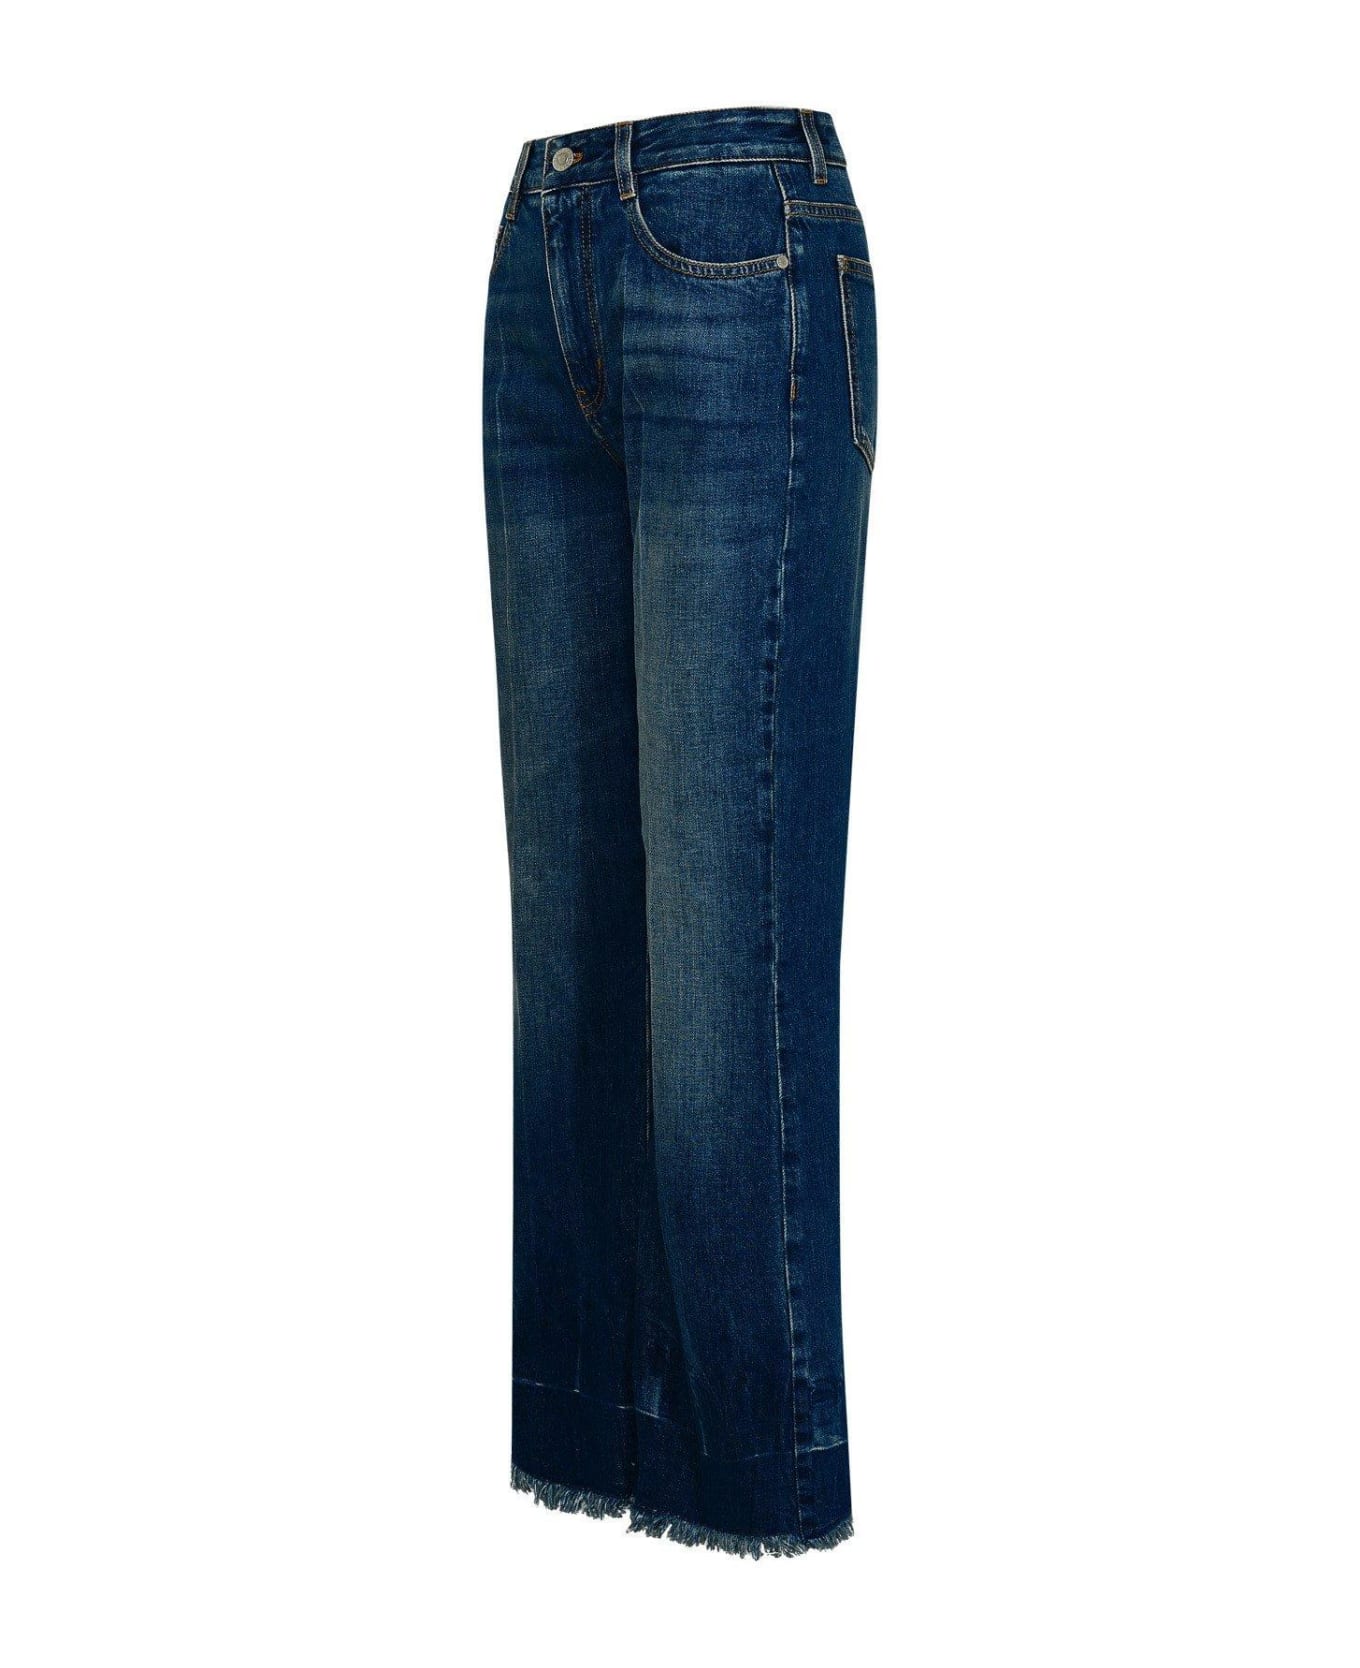 Stella McCartney Cropped Flared Jeans - Blue